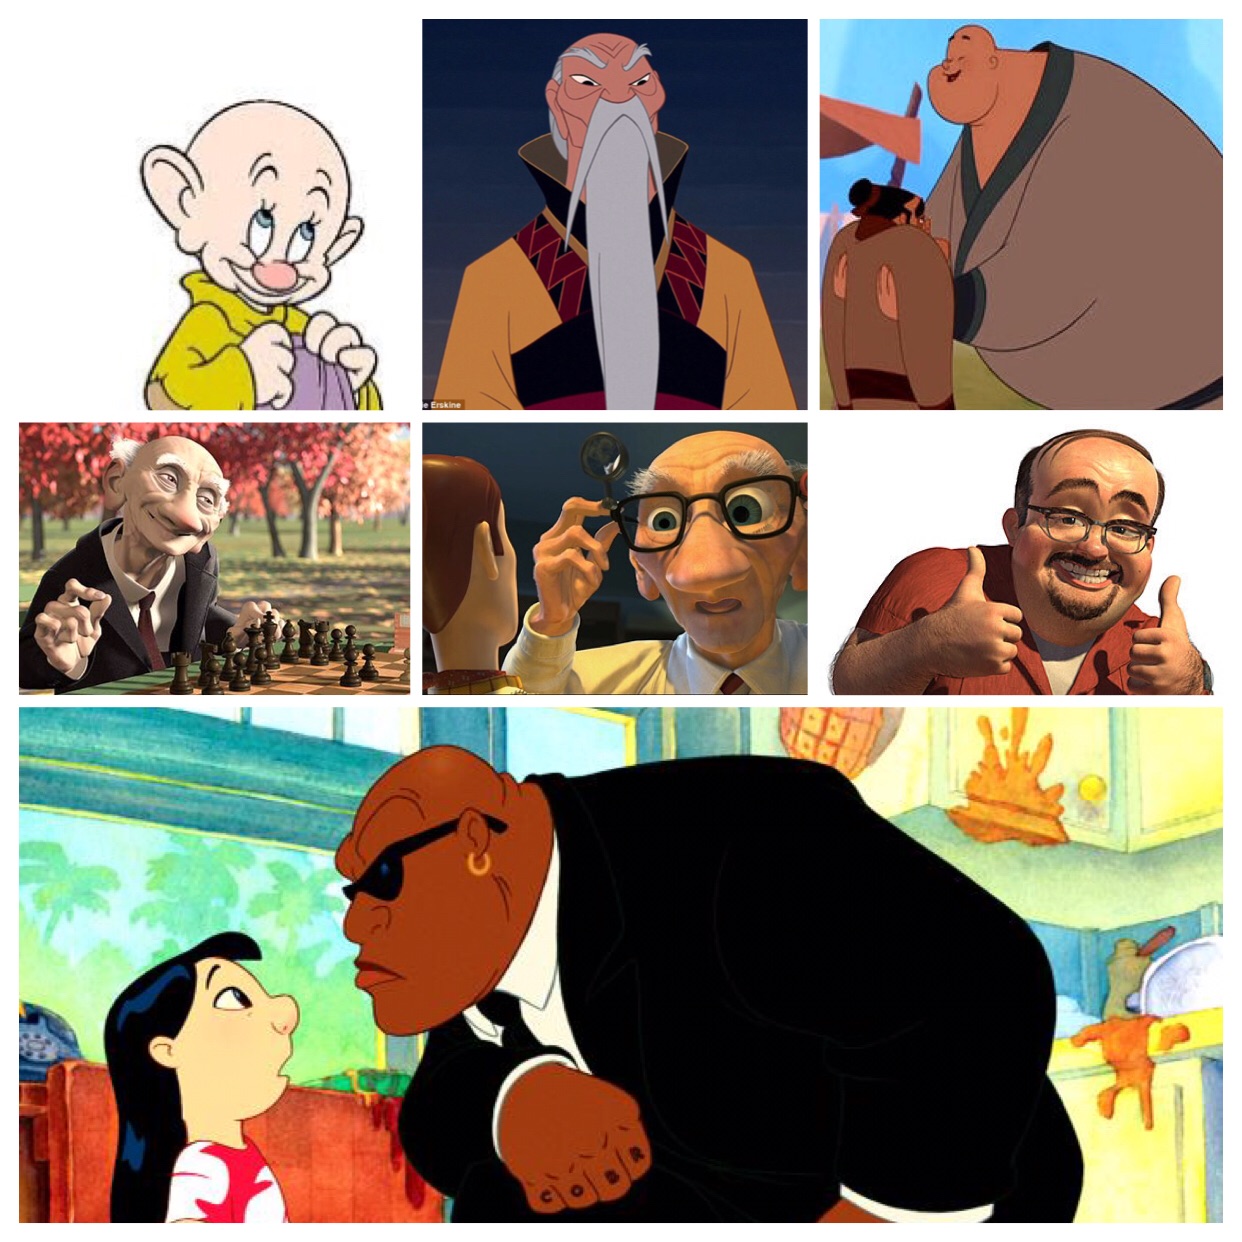 Bald pixar characters